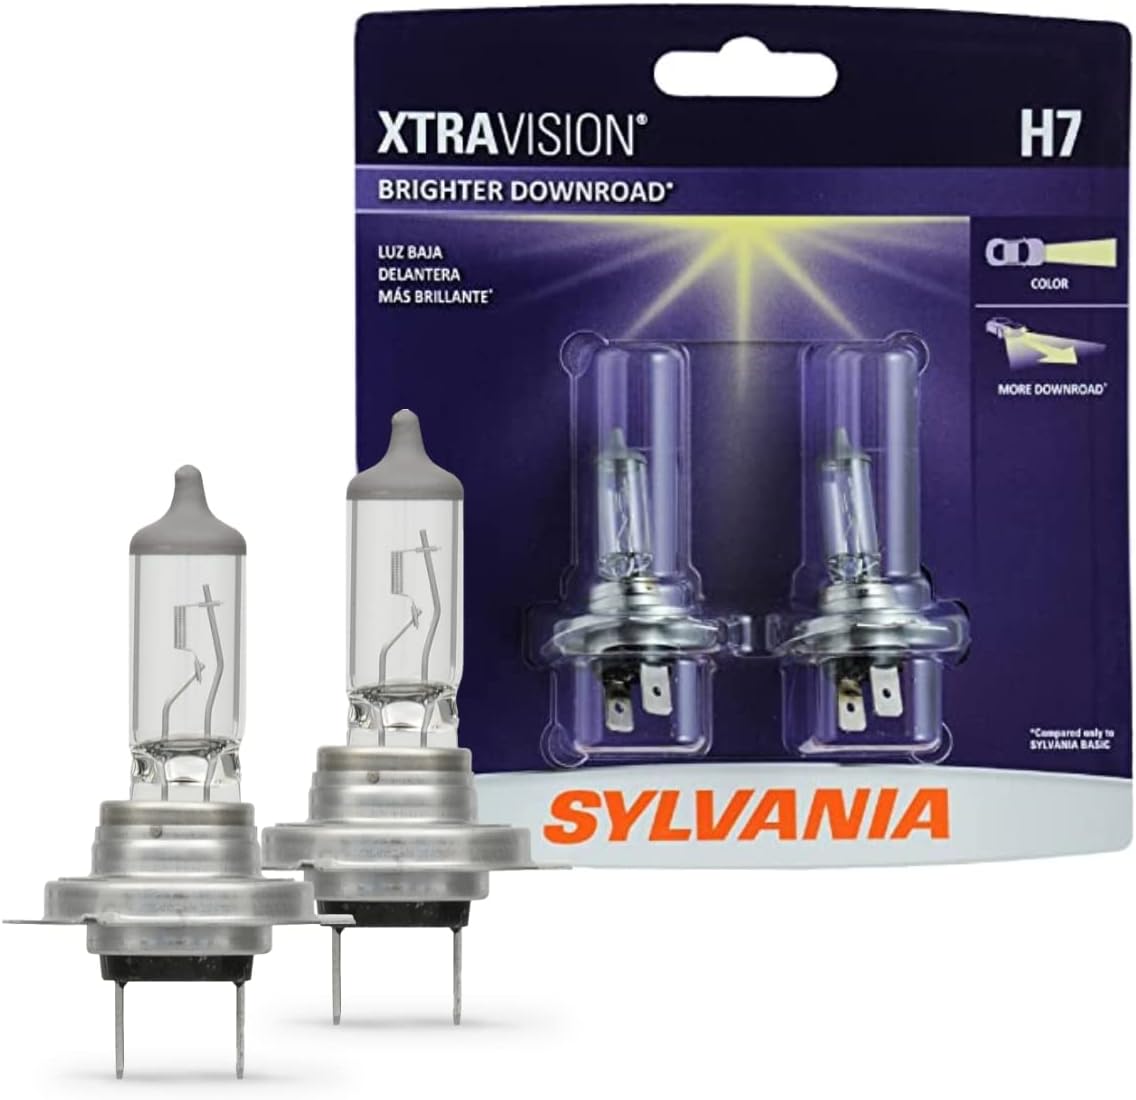 SYLVANIA H7 XtraVision Halogen Headlight Bulb, (Pack of 2)